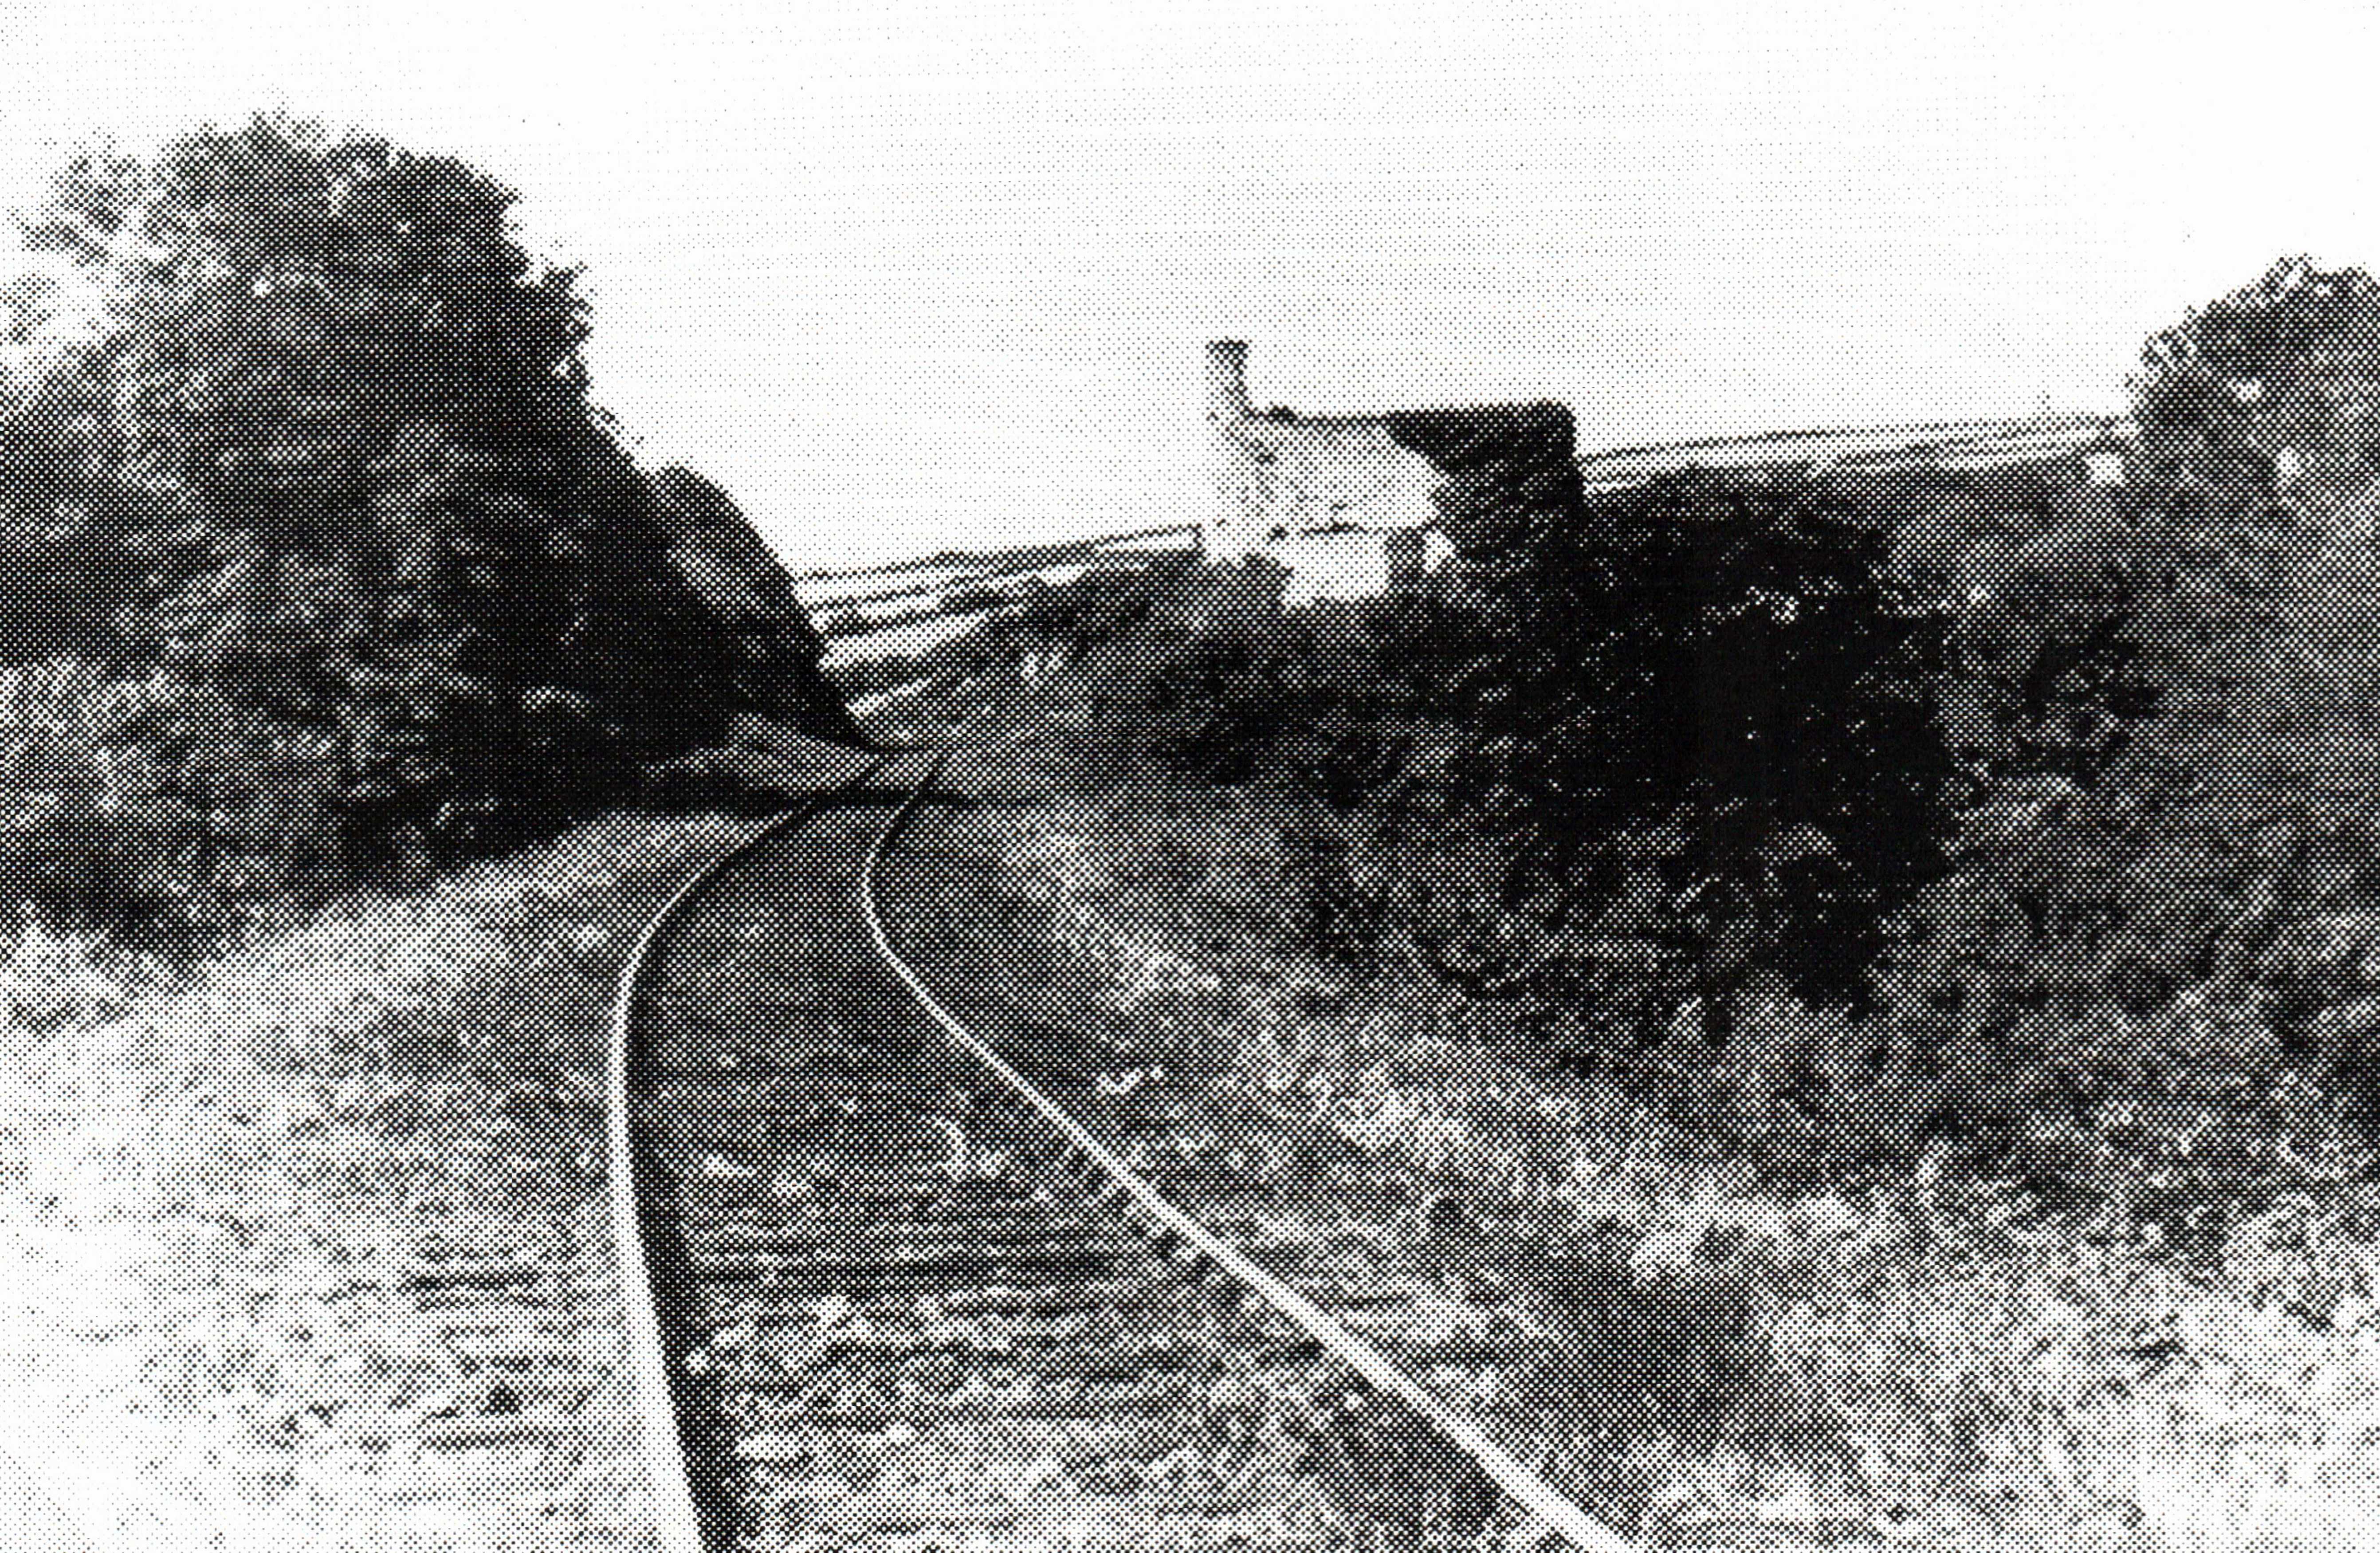 Treamble Mineral Railway - Circa 1935